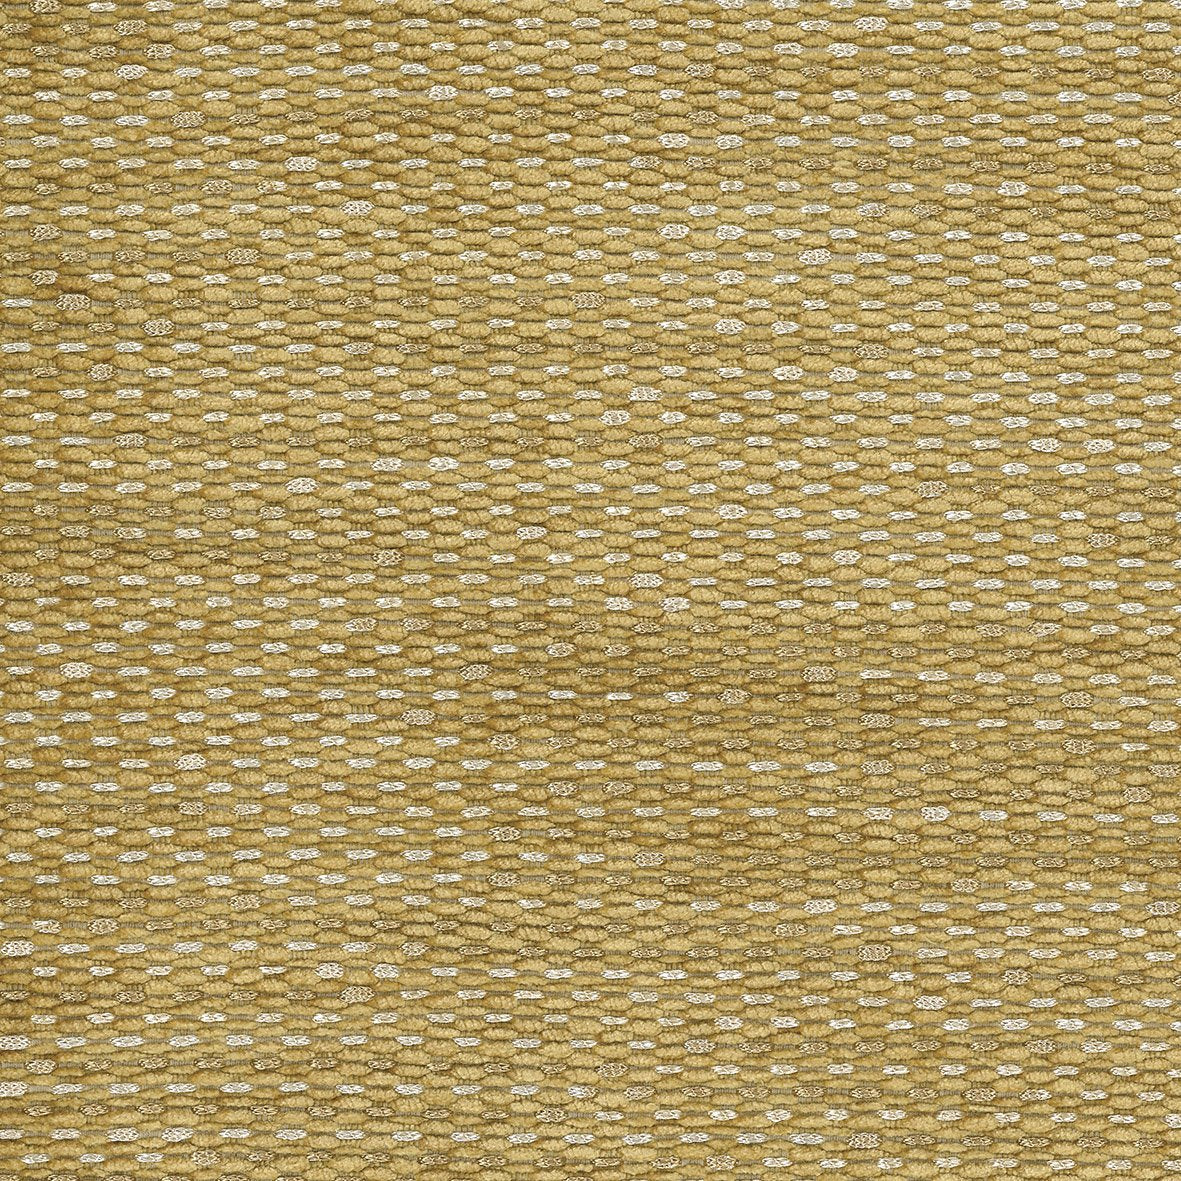 Nina Campbell Fabric - Poquelin Tartuffe Yellow/Pearl NCF4311-04